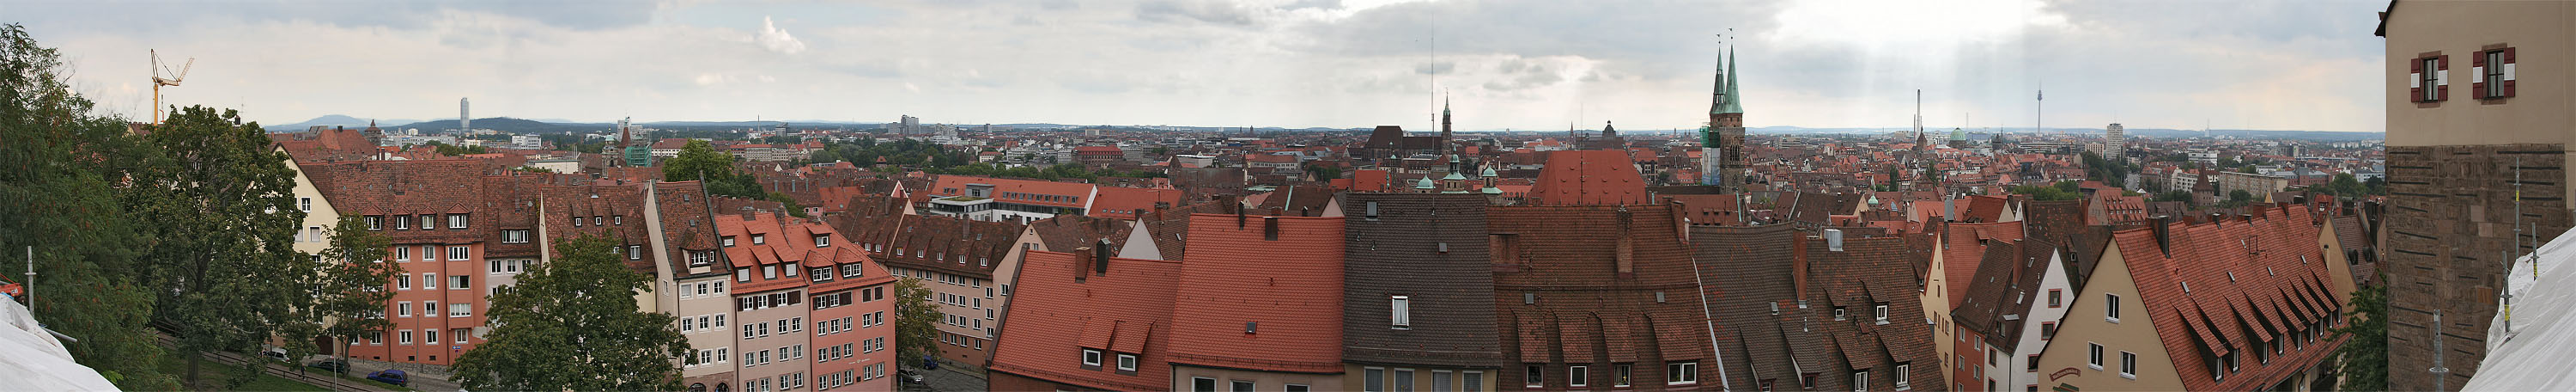 Nürnberg 180°Pano